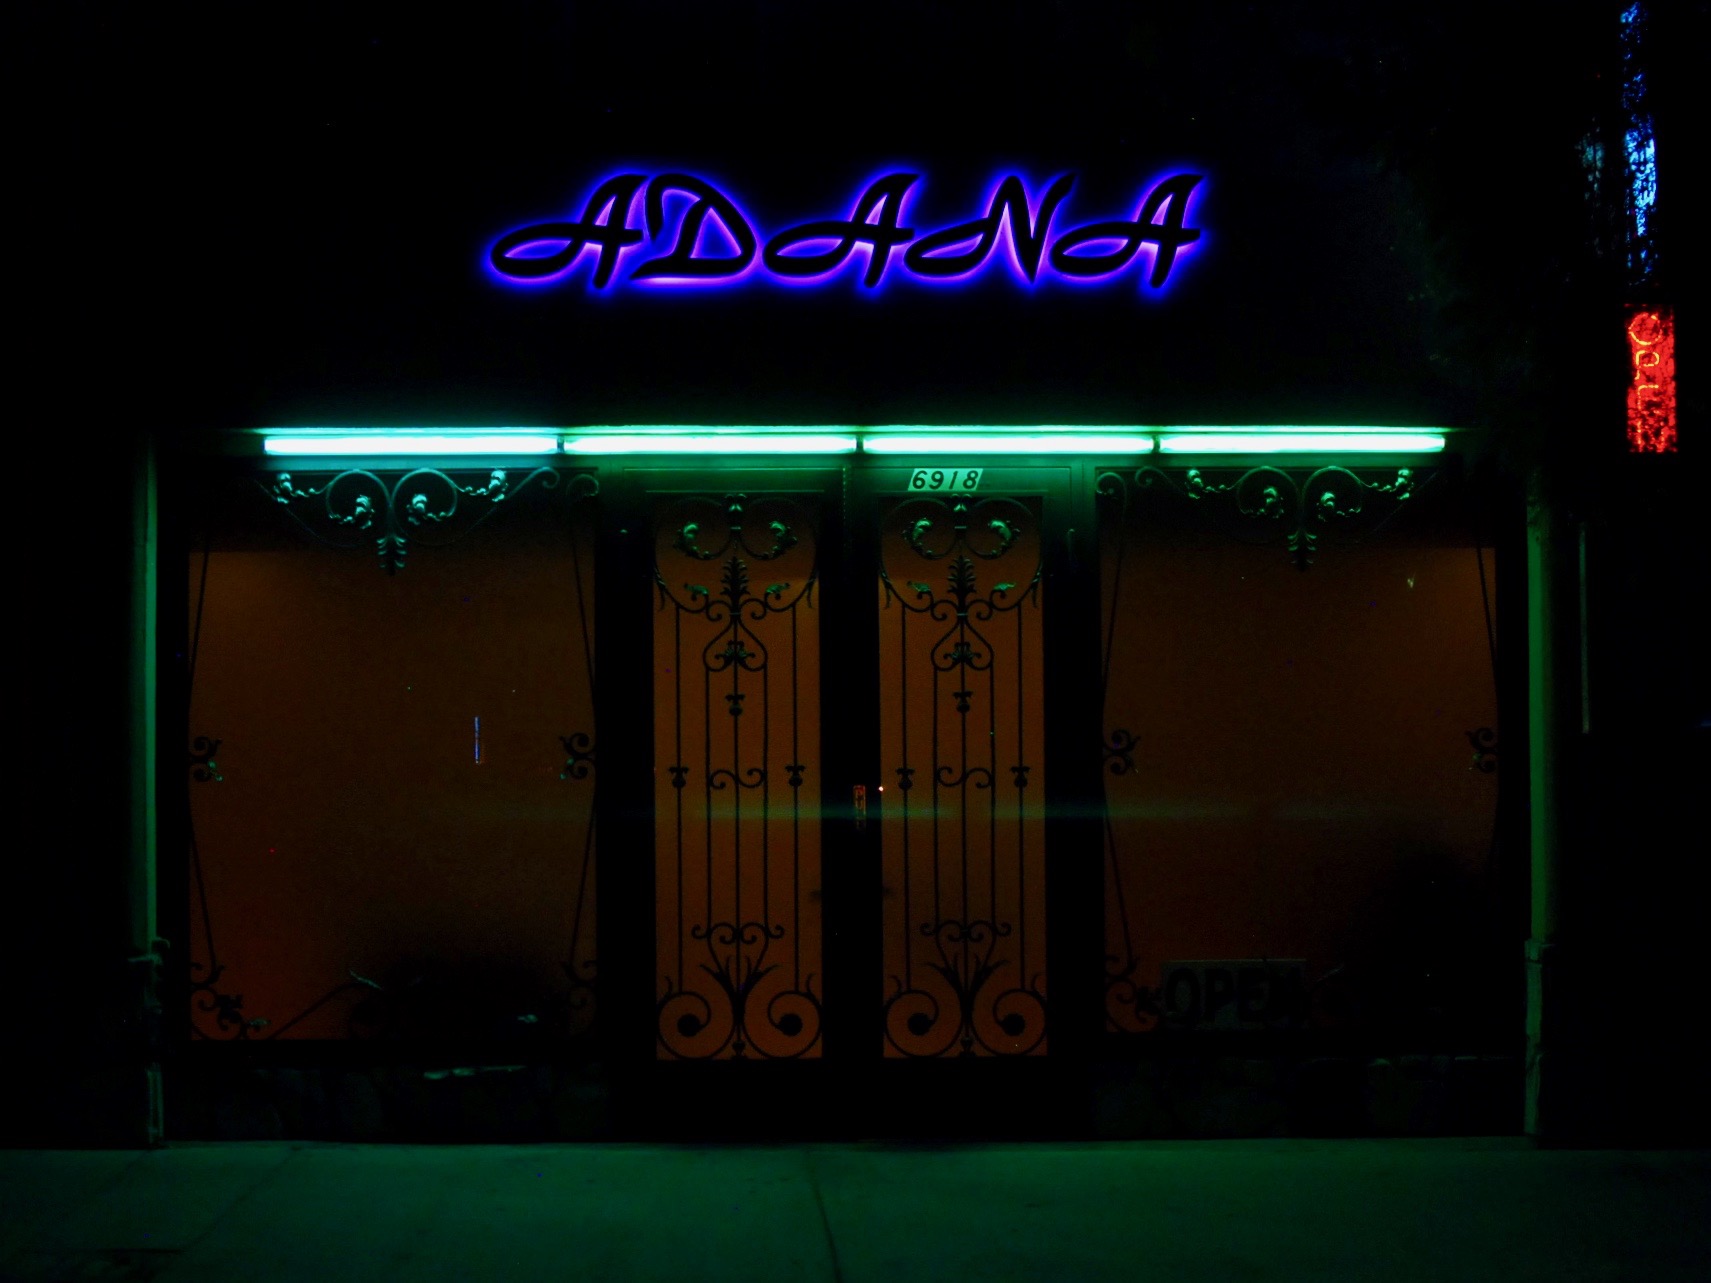 Restaurant Los Angeles